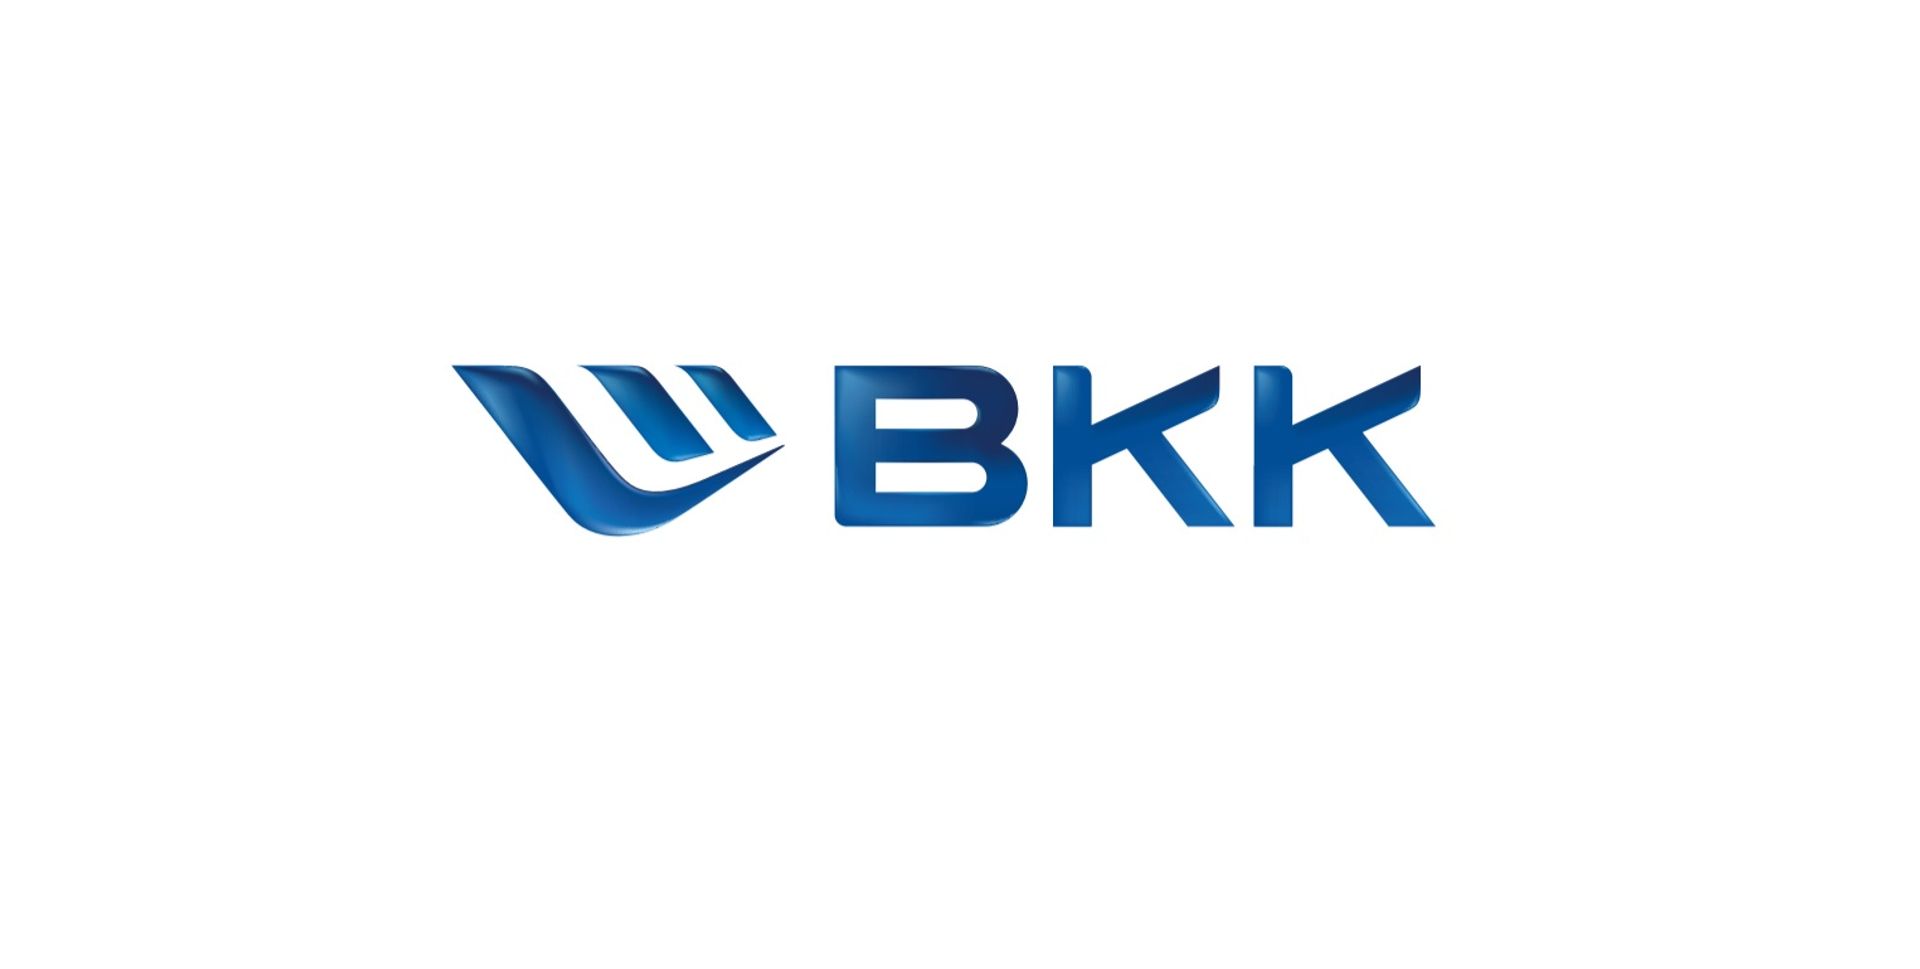 bkk logo